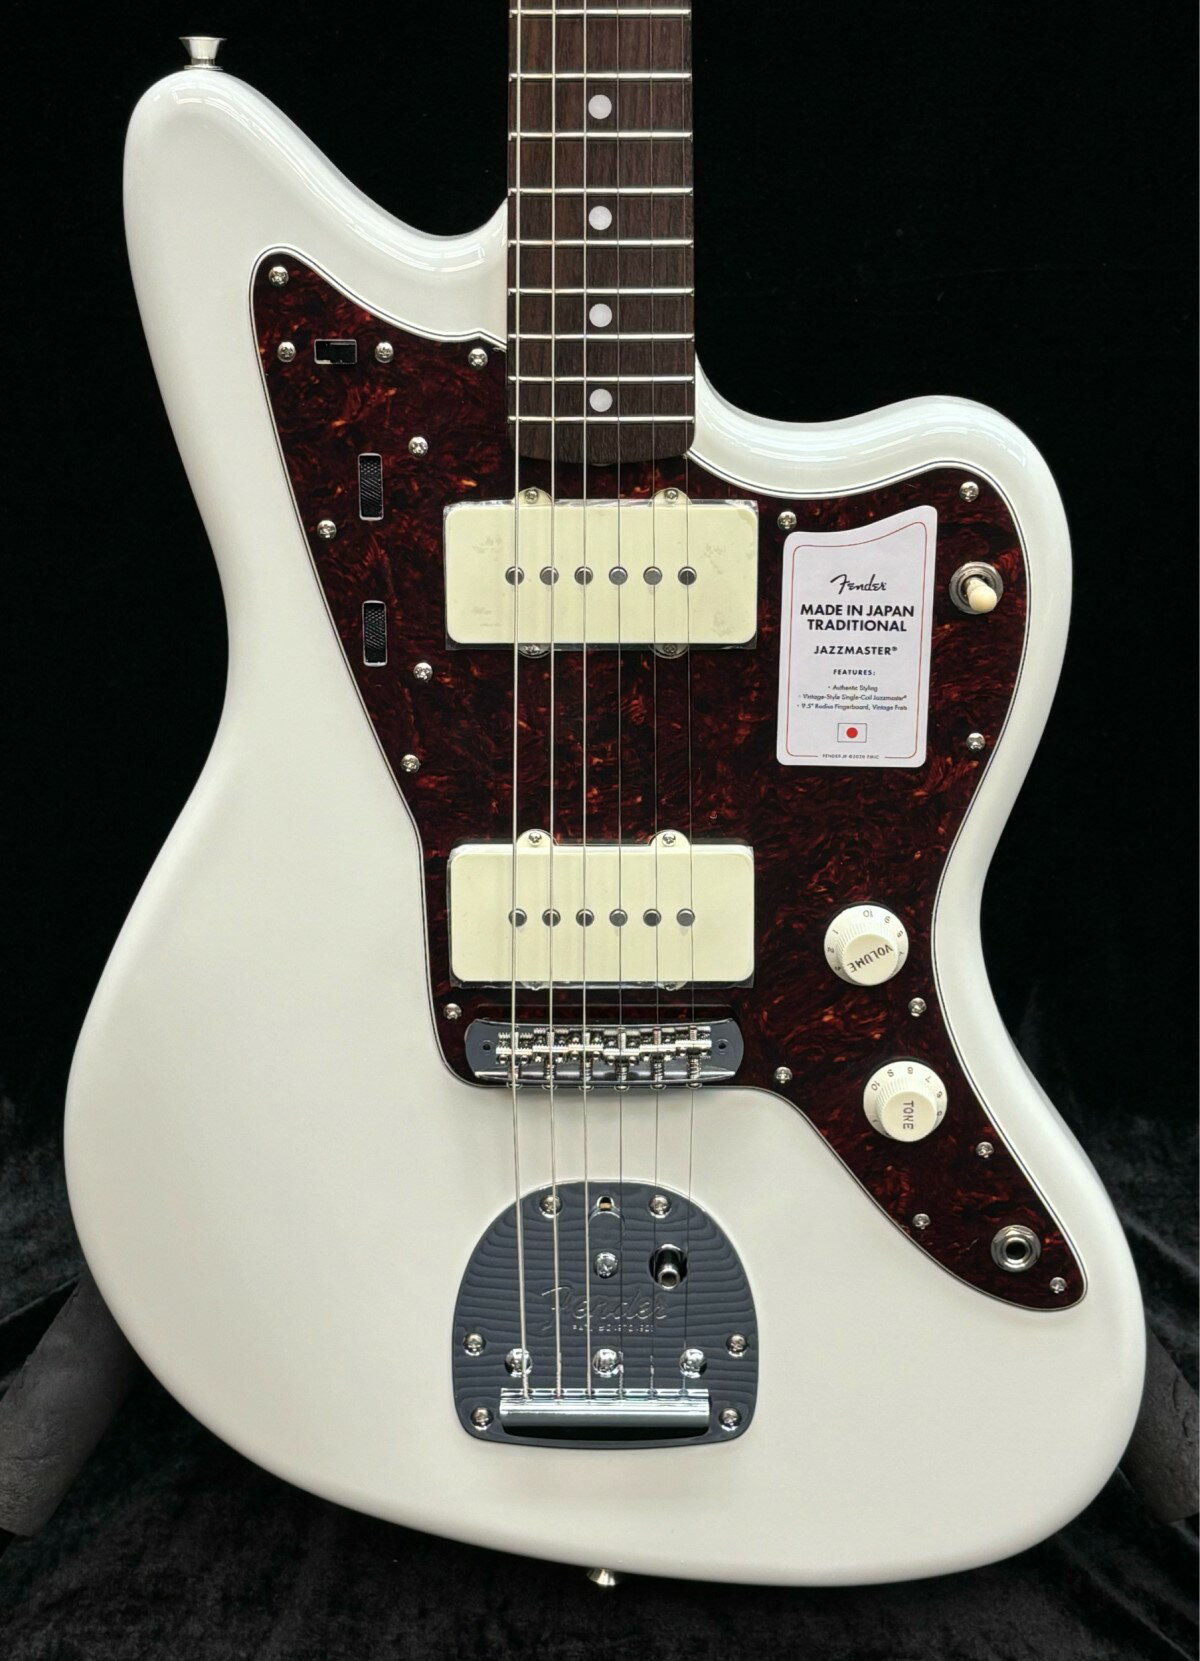 Fender Made In Japan Traditional 60s Jazzmaster -Olympic White-【JD23019291】【軽量3.25kg】 新品[フェンダージャパン][トラディショナル][オリンピックホワイト,白][ジャズマスター][Electric Guitar,エレキギター]